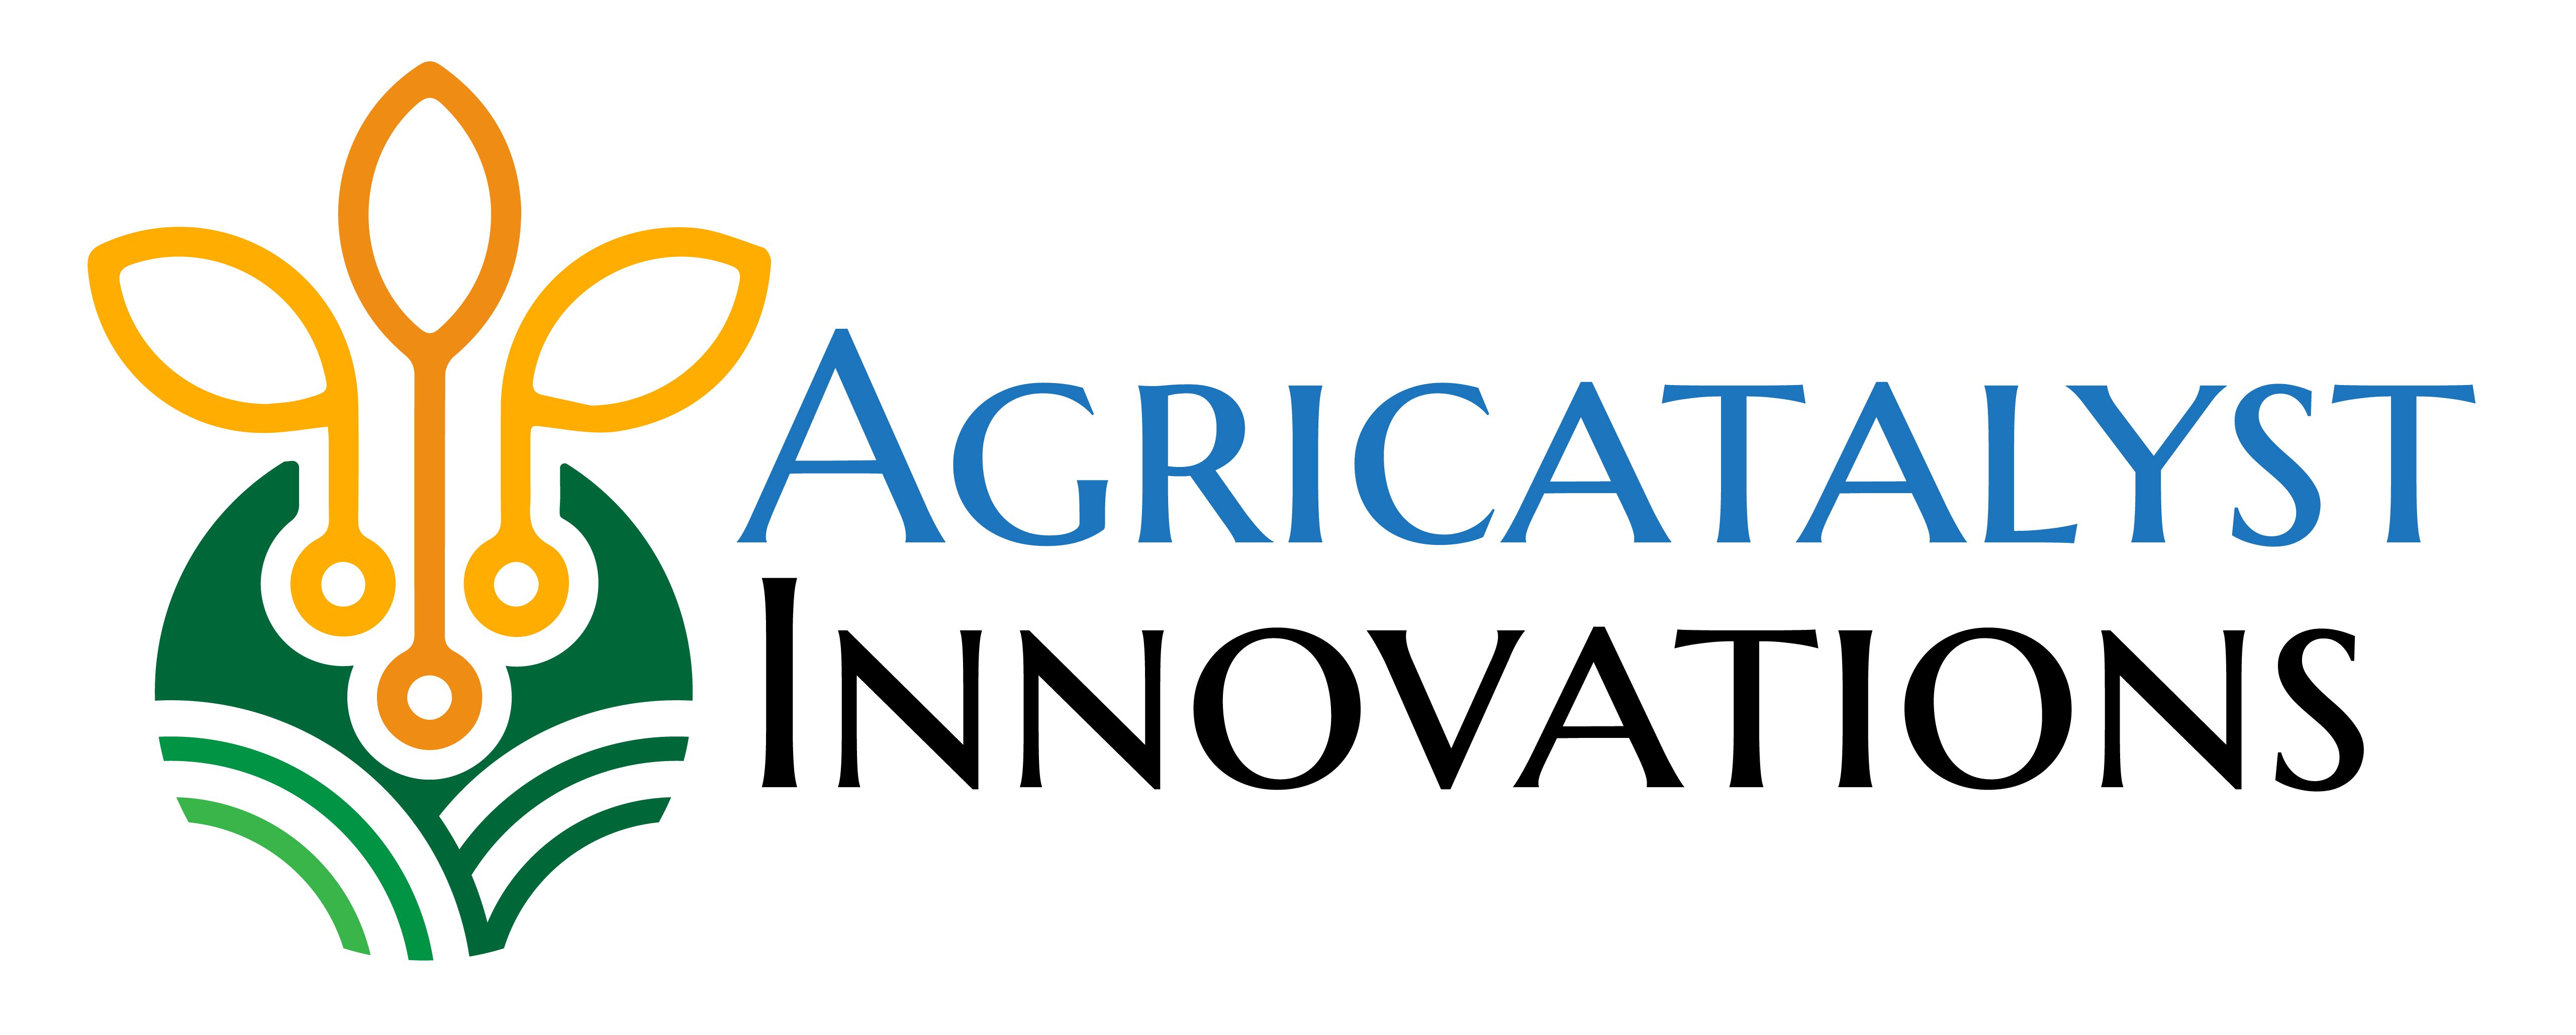 AgriCatalyst Innovations